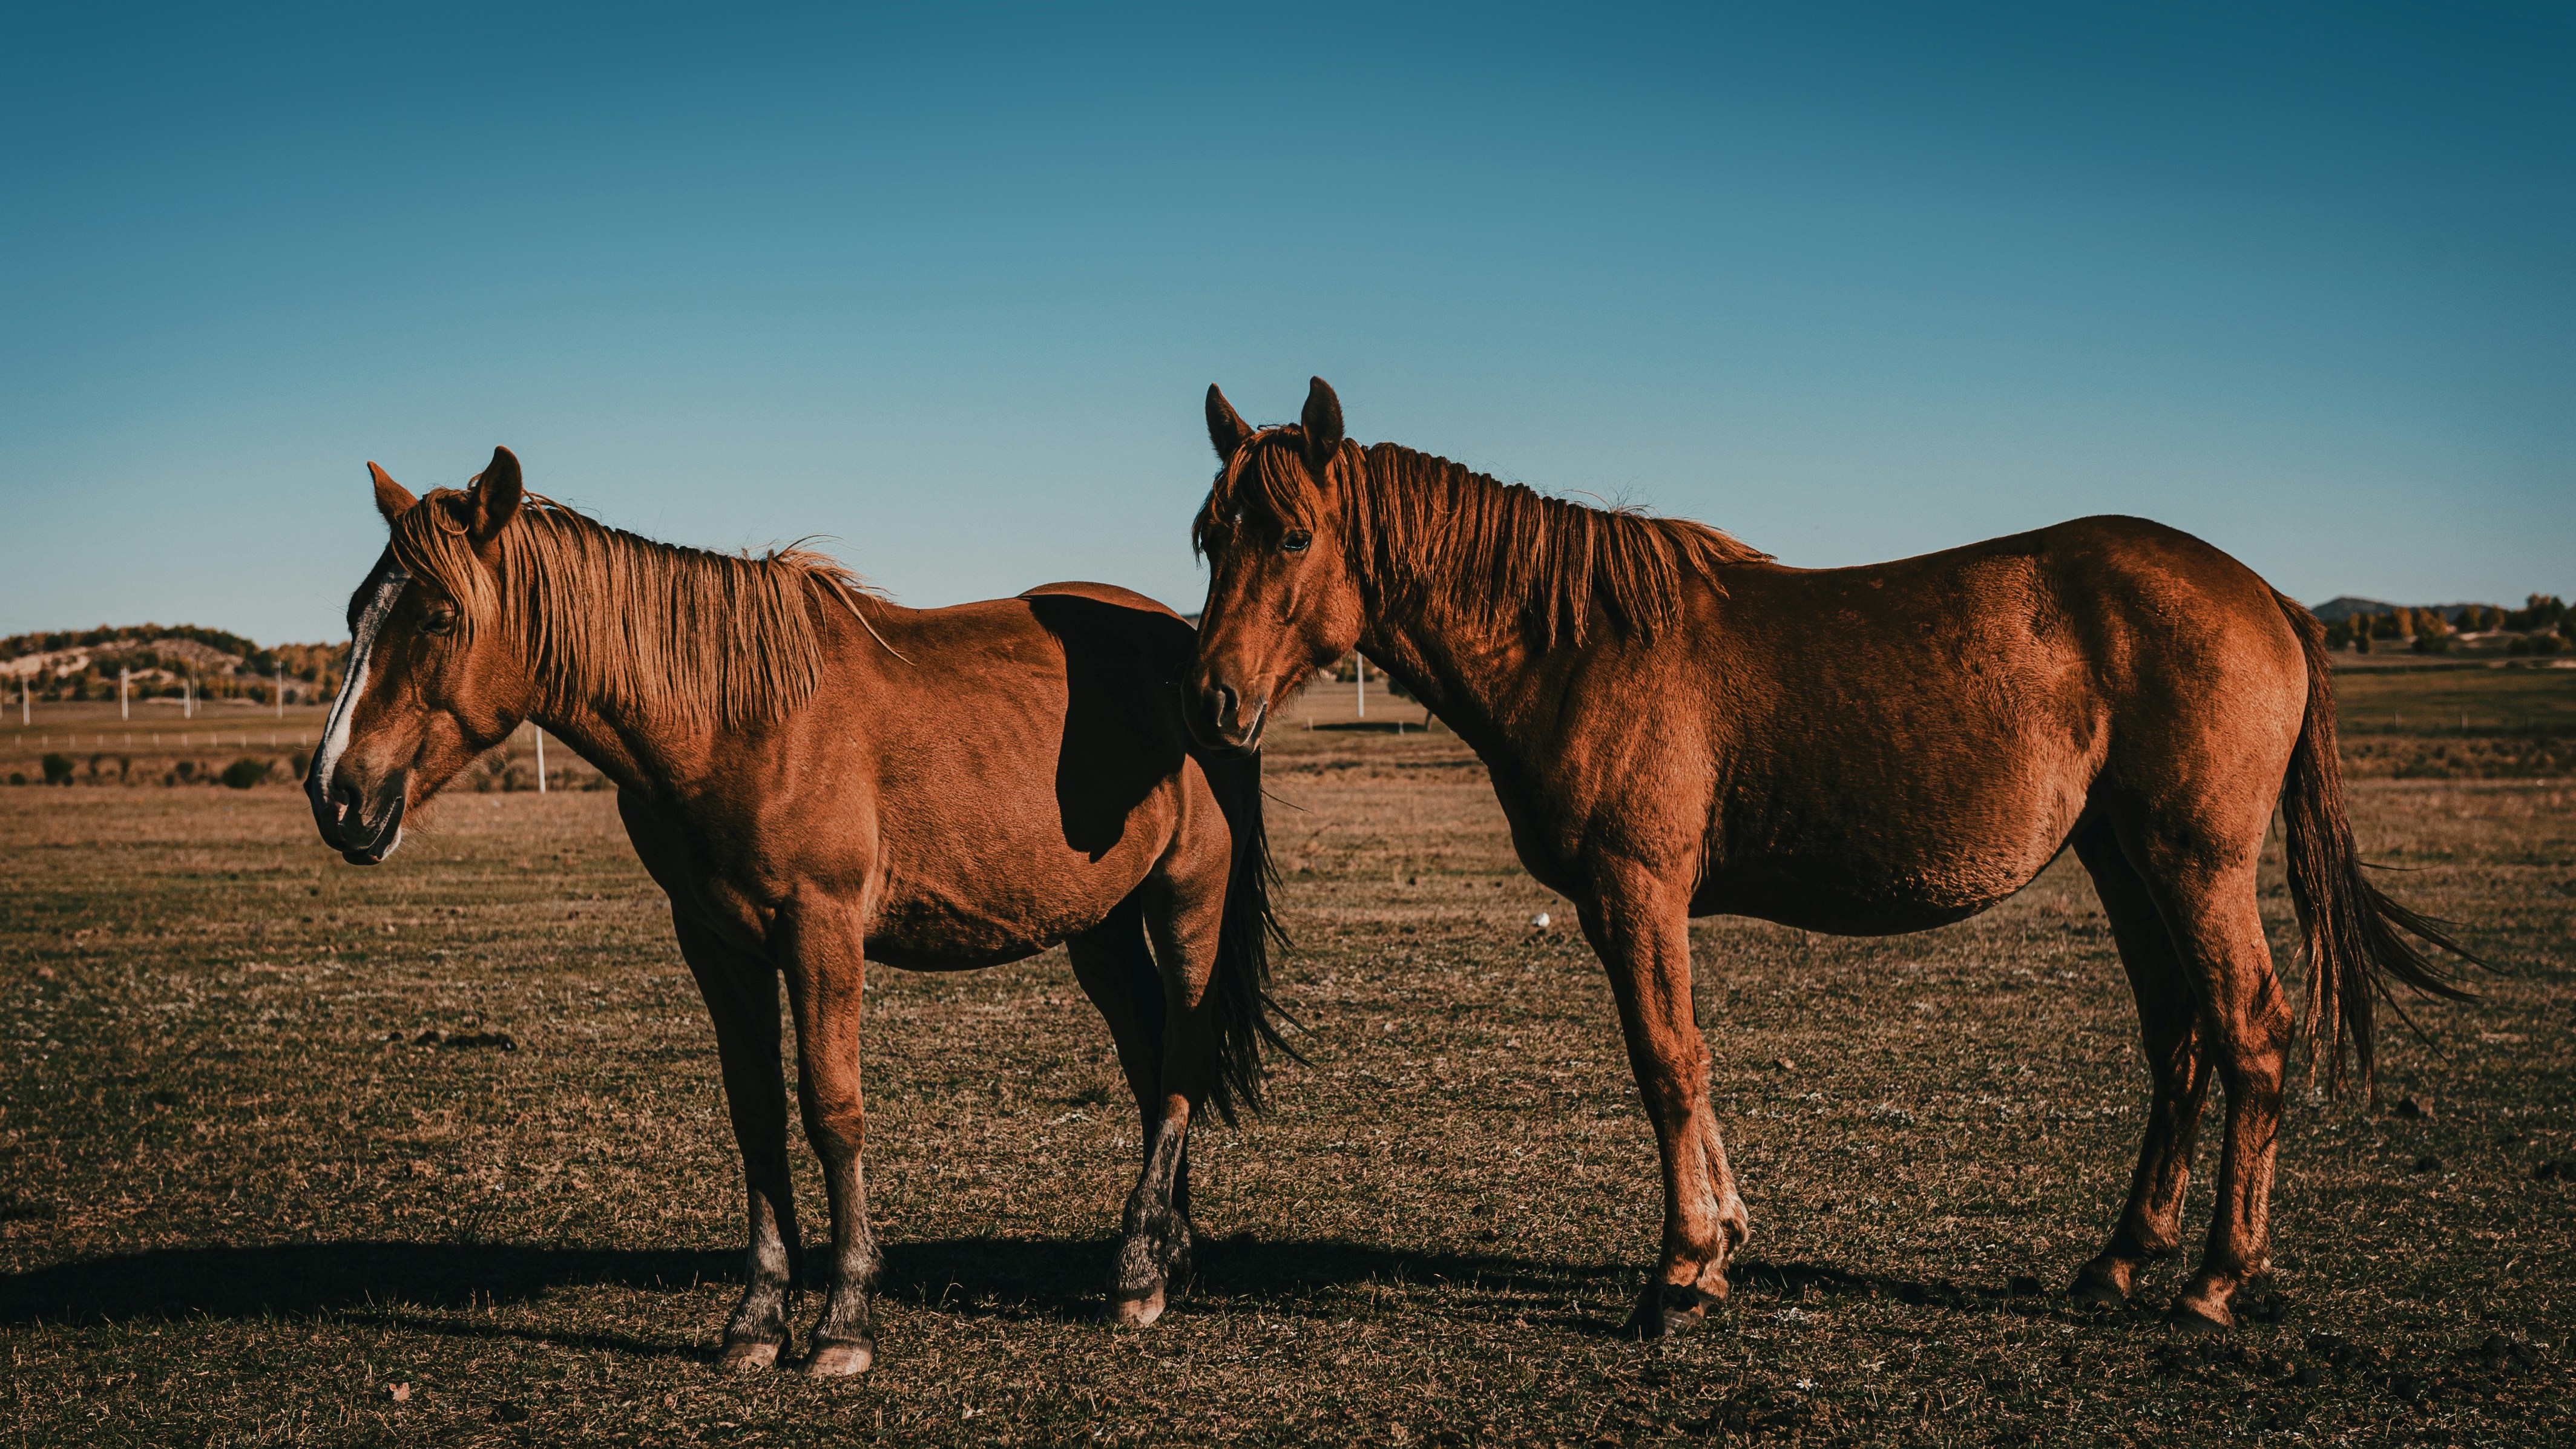 Horses on the grassland